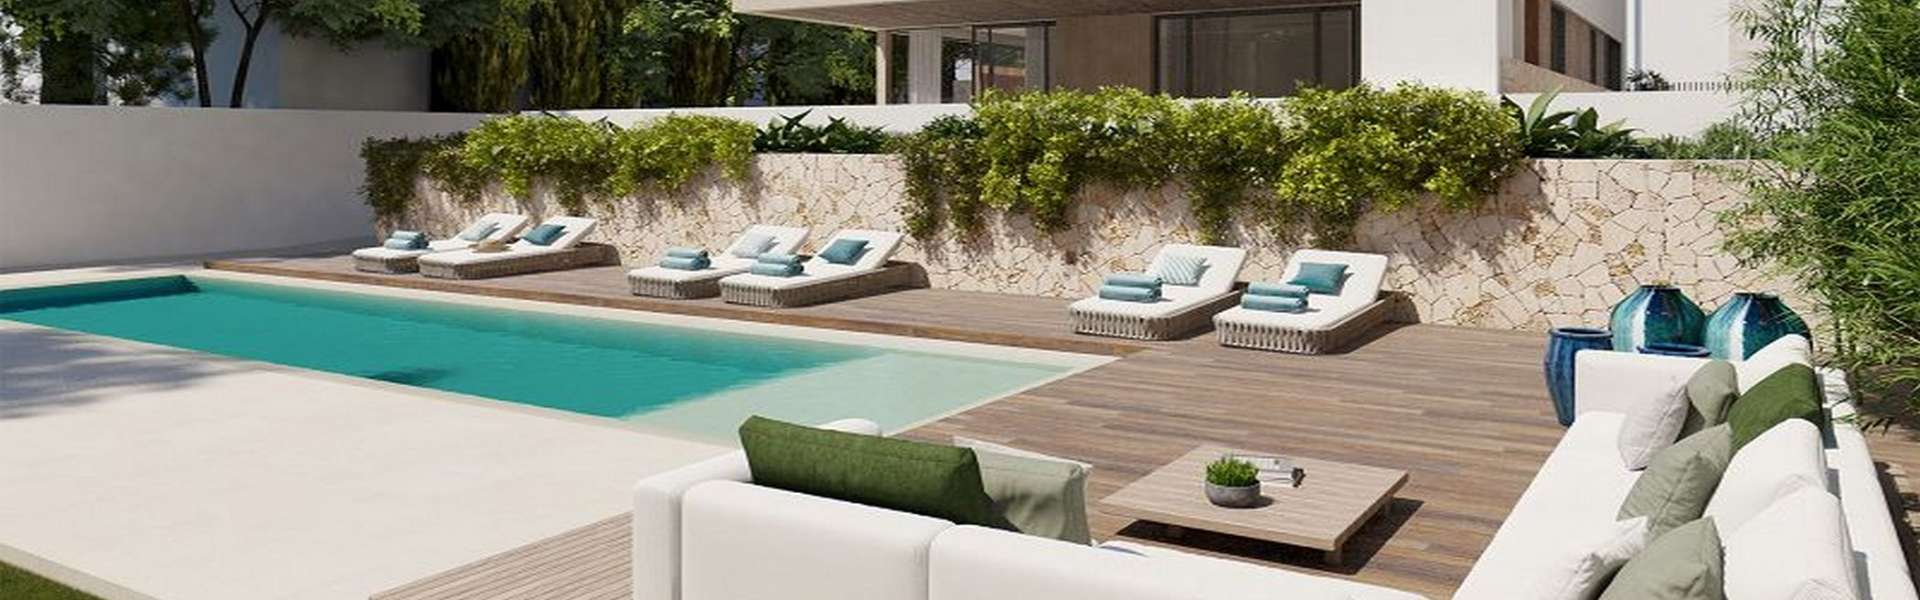 Palma/Son Armadams – Luxus-Apartments/Luxus-Penthouse in der Nähe des Schlosses Bellver 